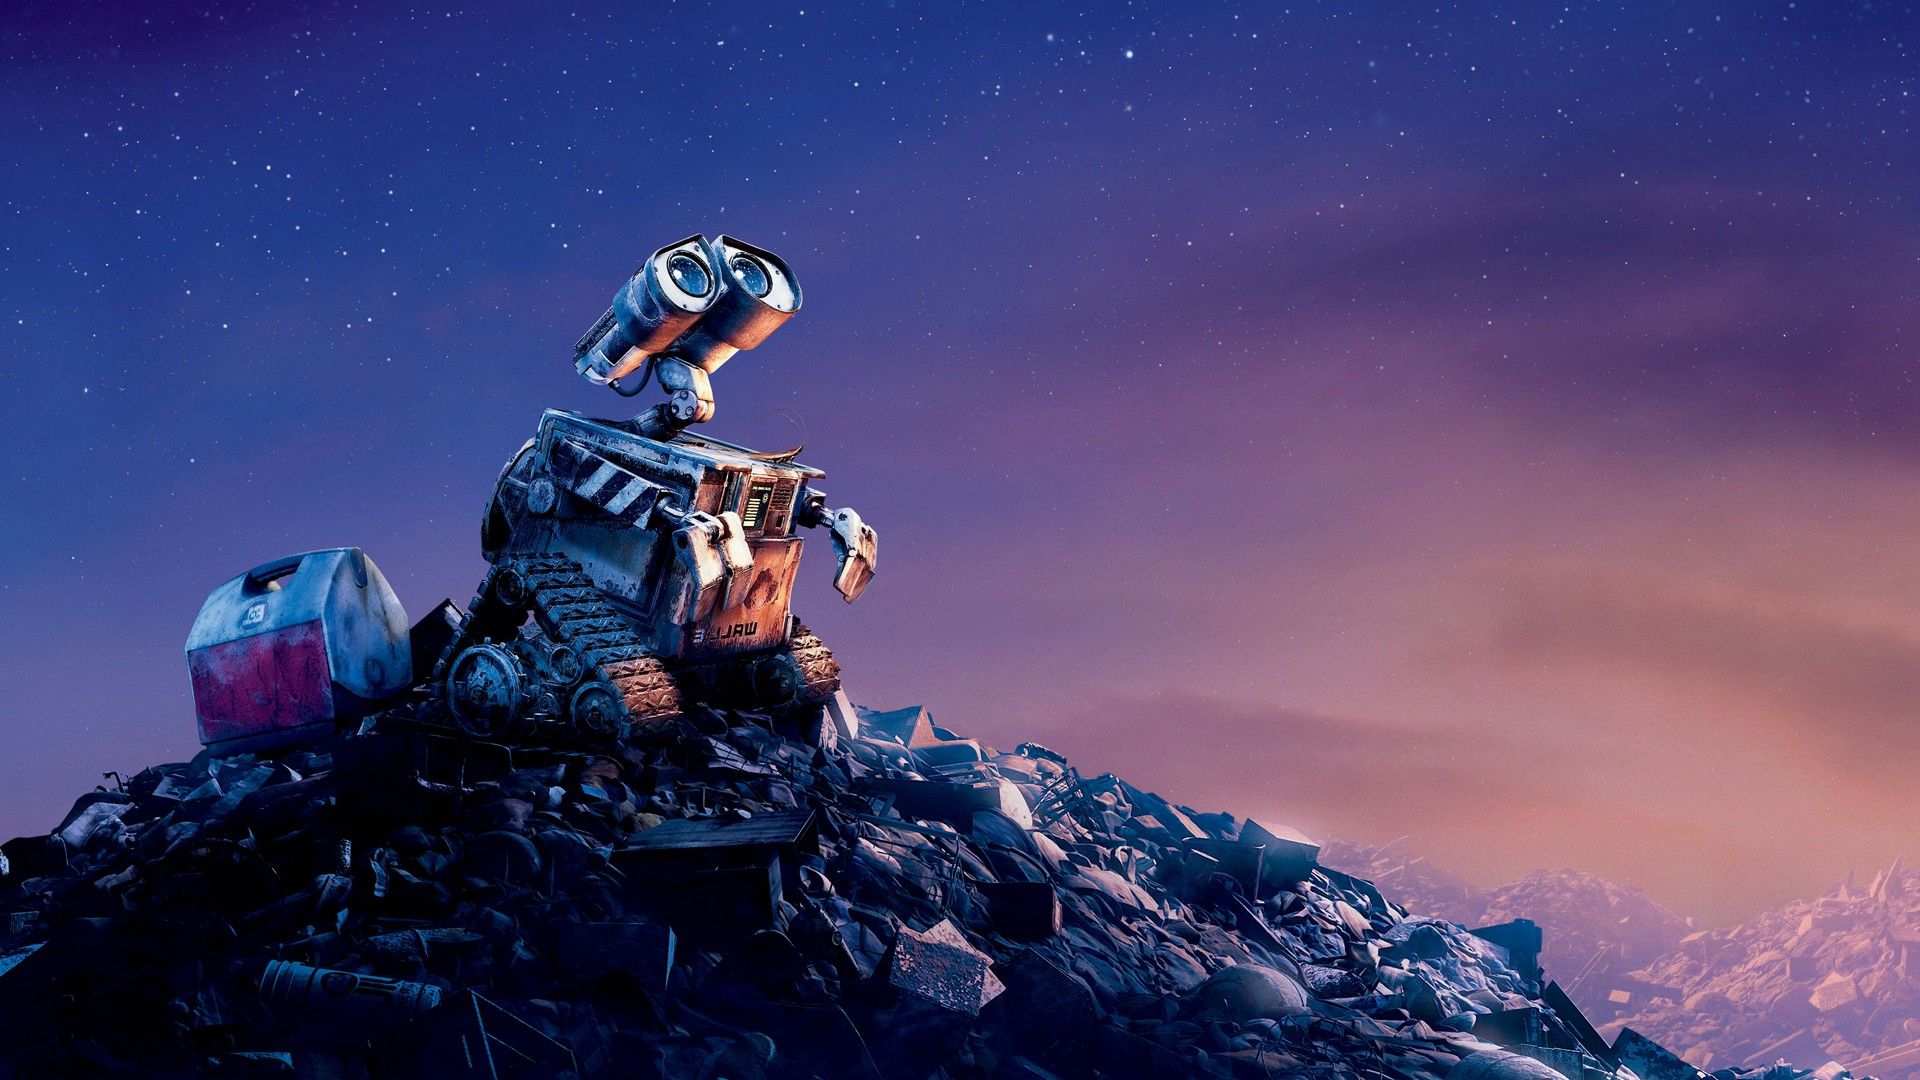 Animationsspektakel Disney+: Alle Filme von Kultstudio Pixar, inklusiver ihrer besten Kurzfilme.